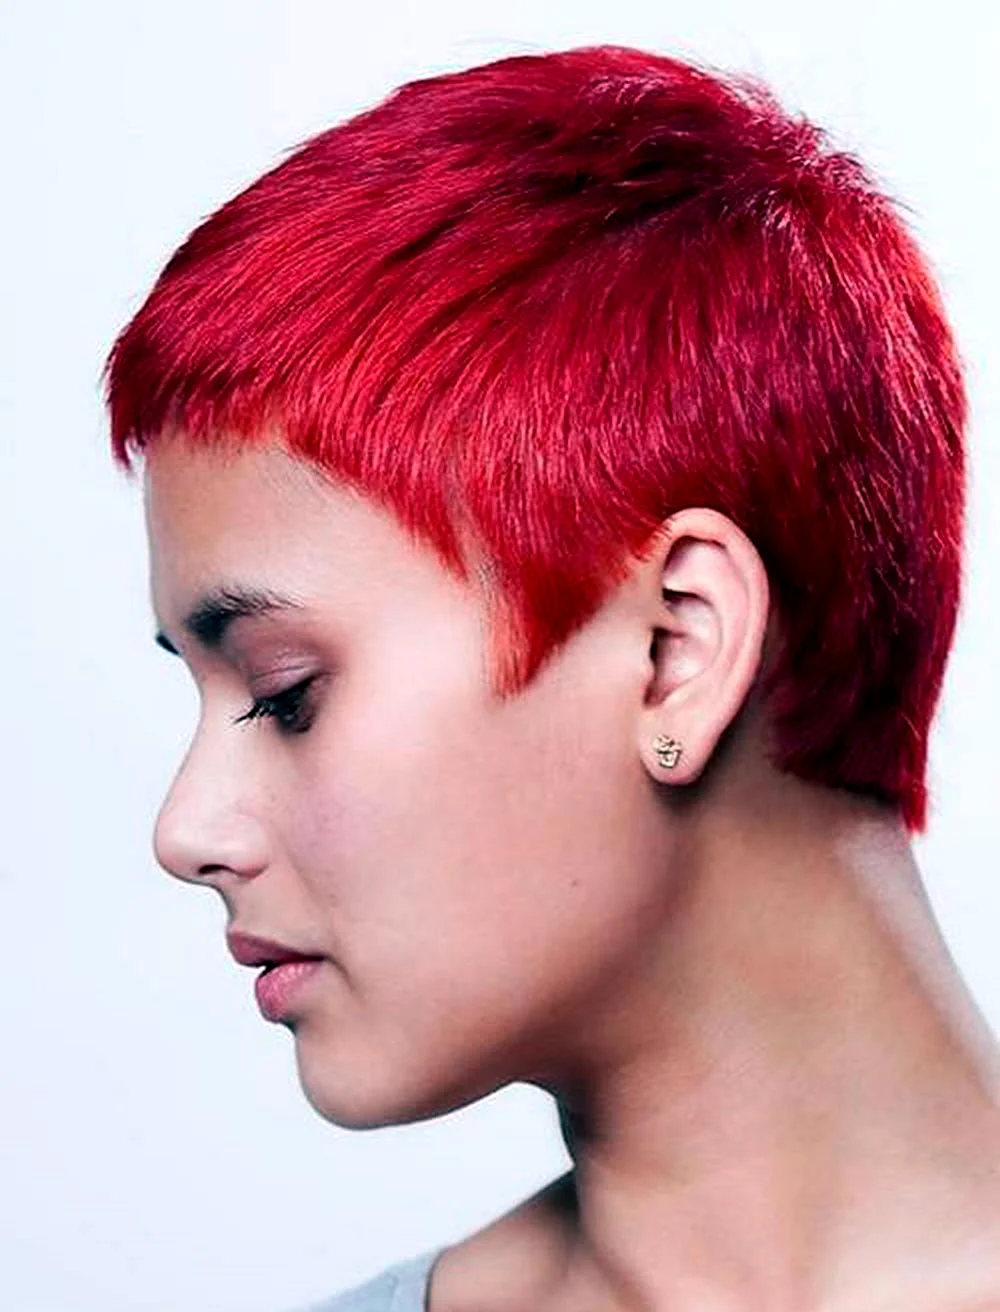 Haircut Red